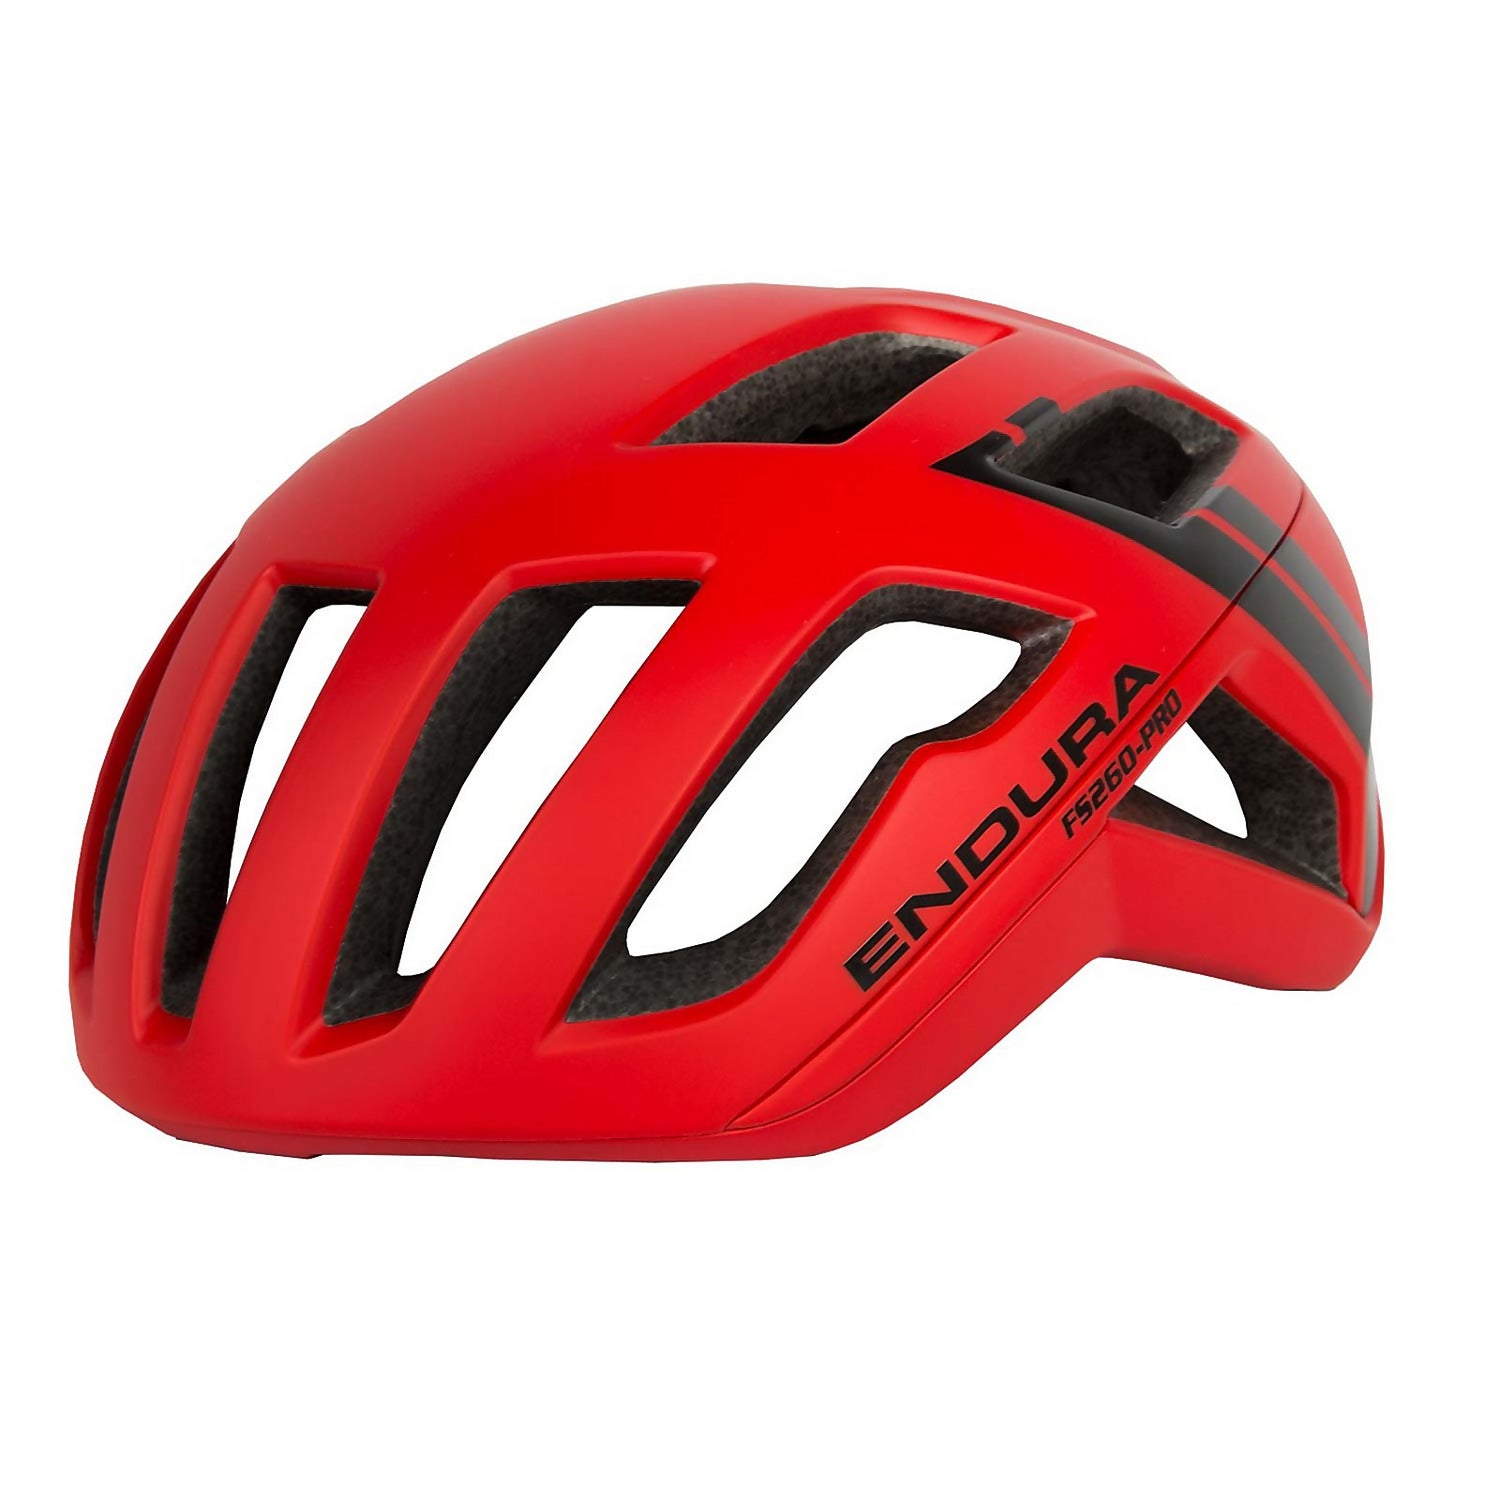 Men's FS260-Pro Helmet - Red